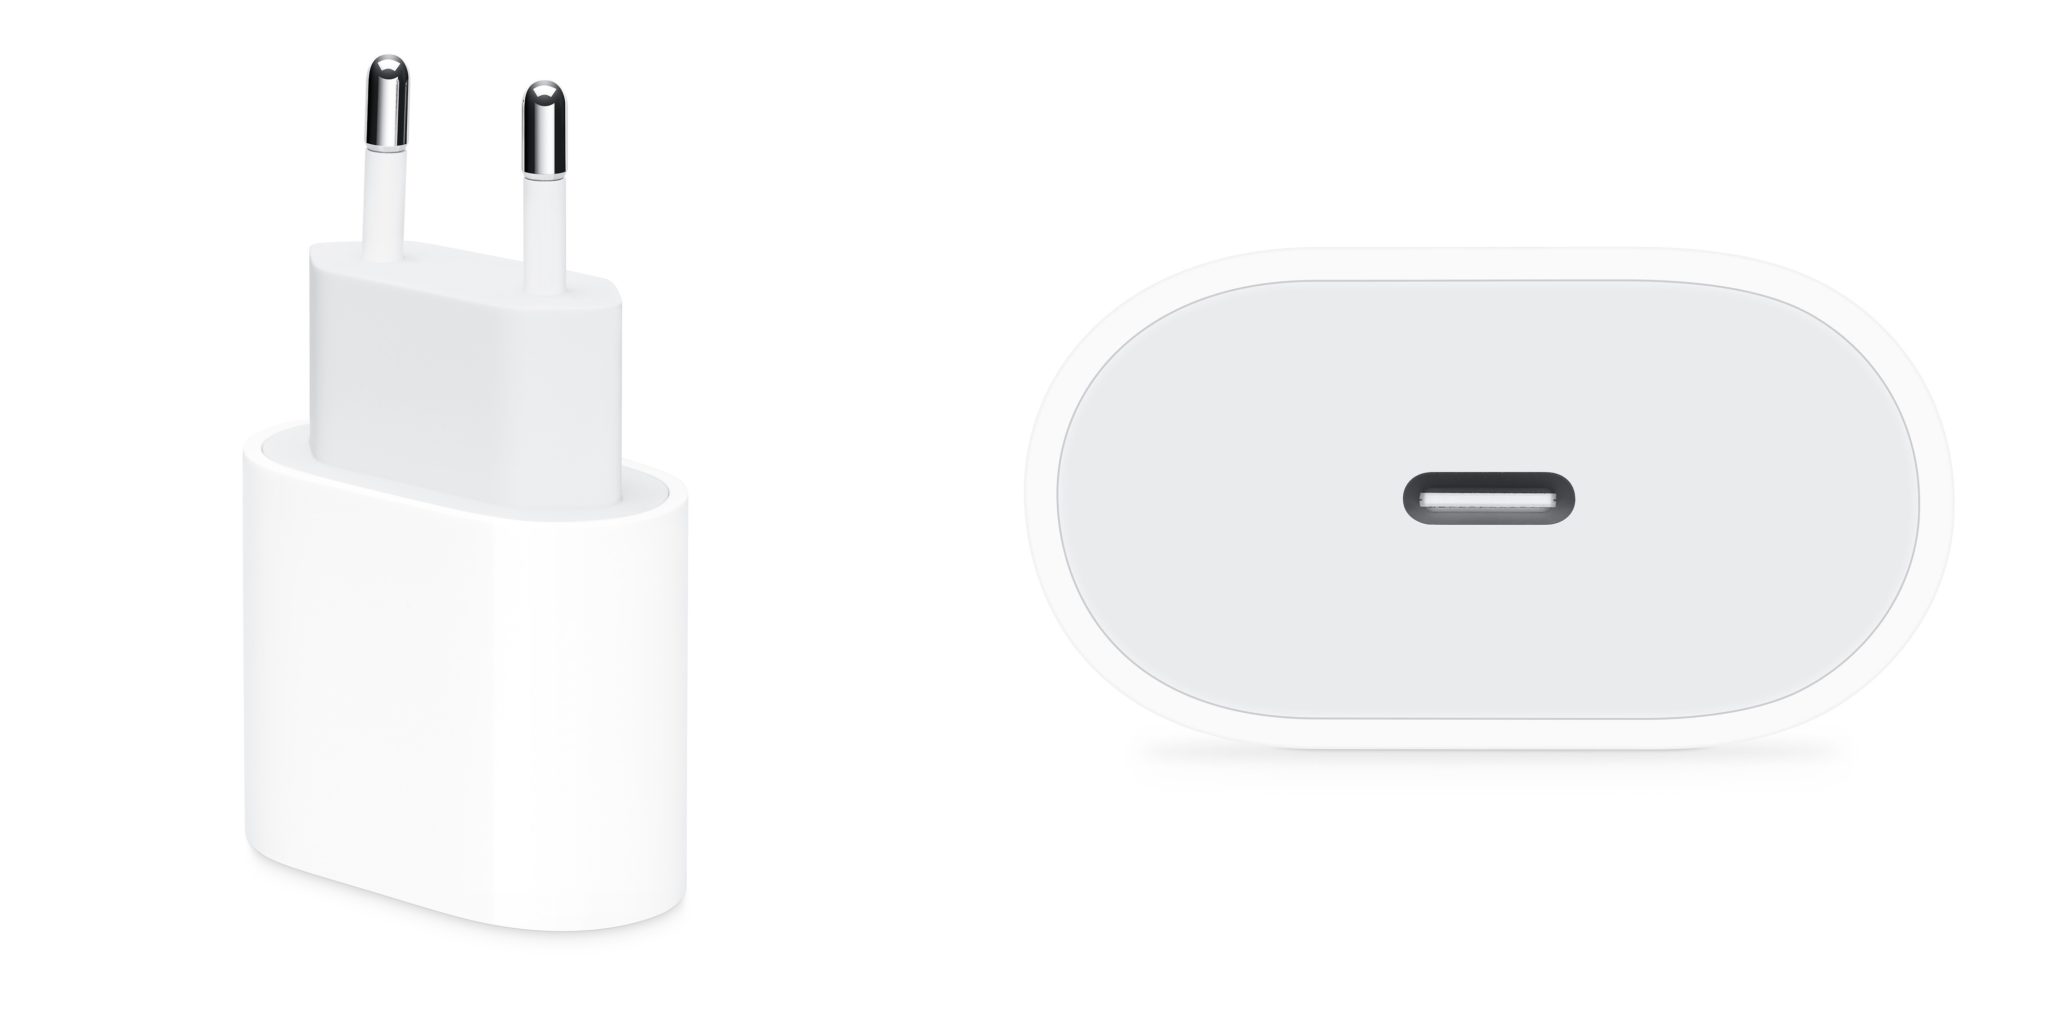 Блок для айфона 15 про макс. Адаптер- Apple 20w USB-C Power Adapter. Адаптер эпл 20 ватт. Адаптер питания Apple USB-C 20 Вт. Адаптер для Apple iphone 20w USB-C.